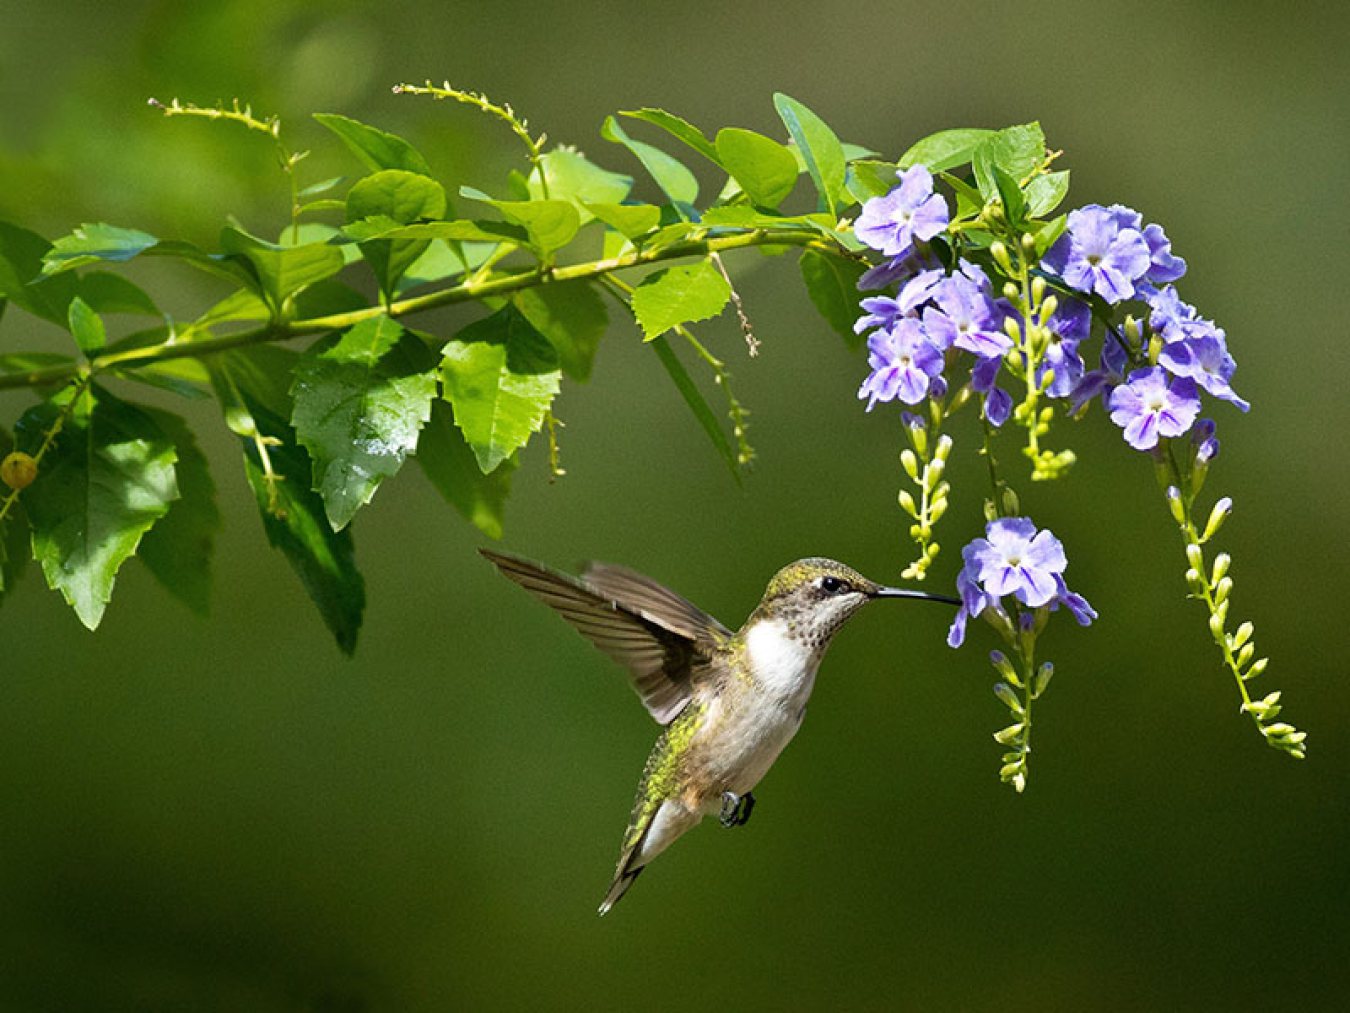 Rufous Hummingbird by Janet Chung